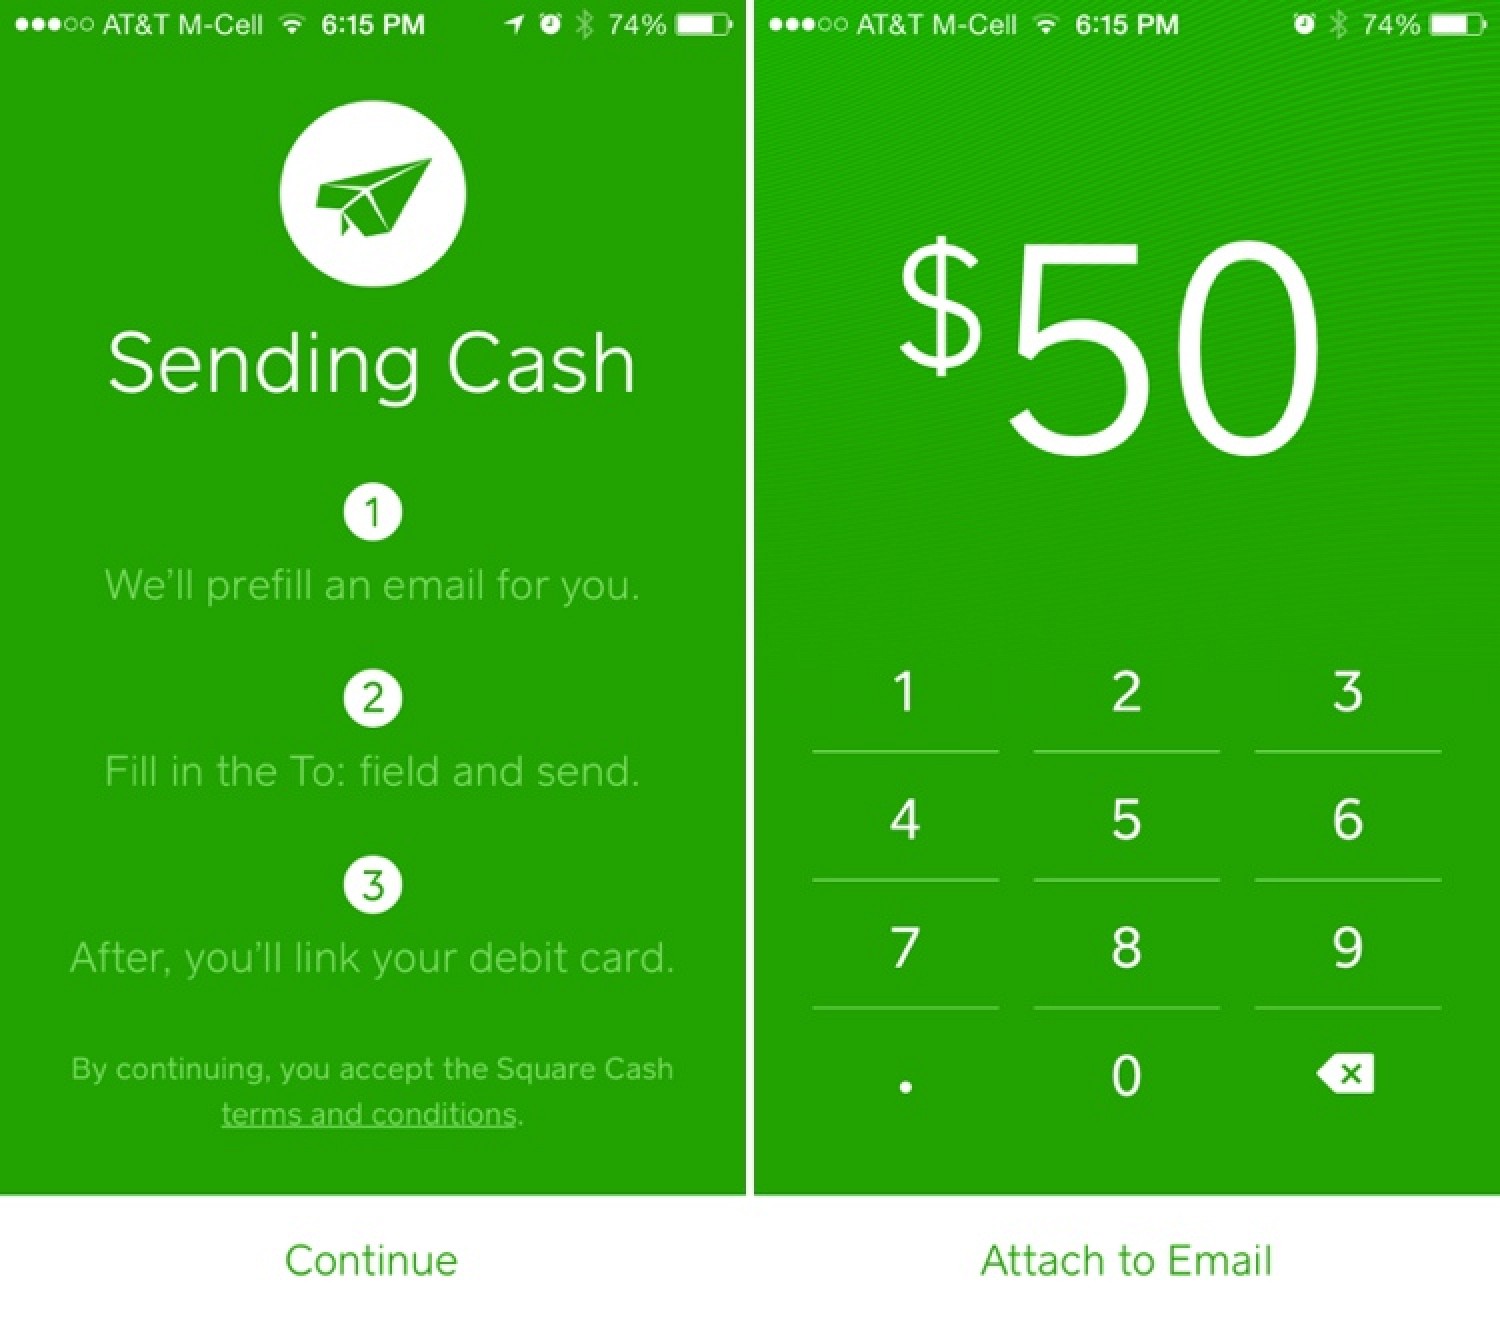 Square Debuts Square Cash Service, iPhone App MacRumors